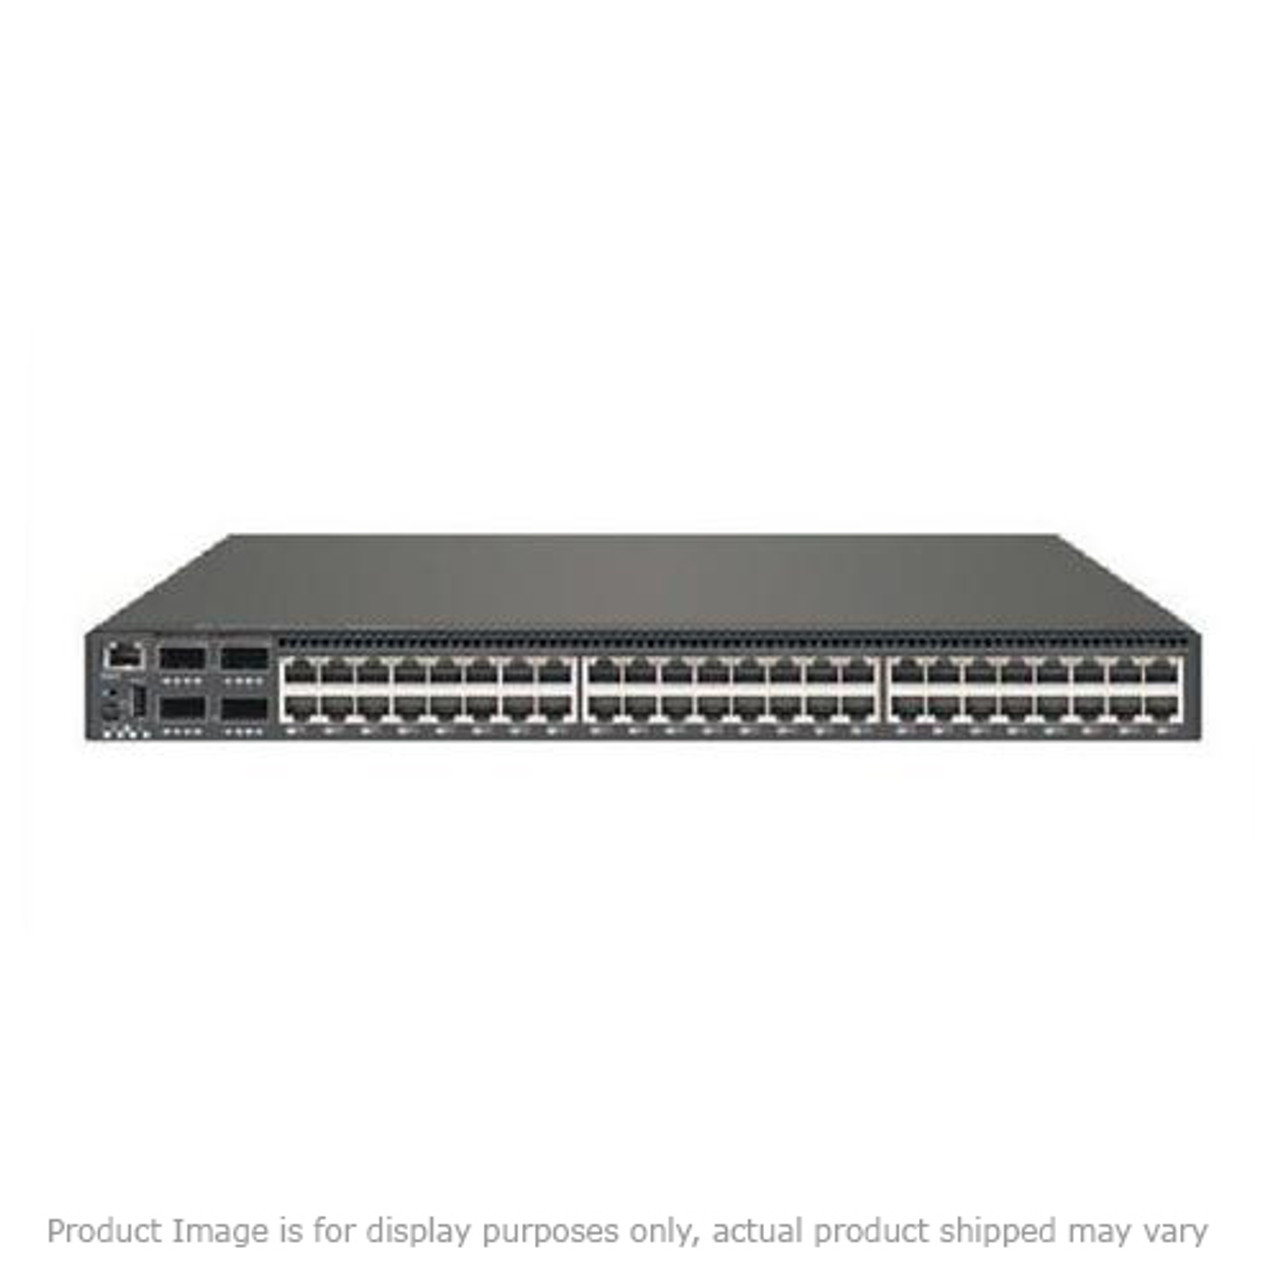 167002-B31 Compaq 5708fx 8-Ports Fast Ethernet Switch (Refurbished)